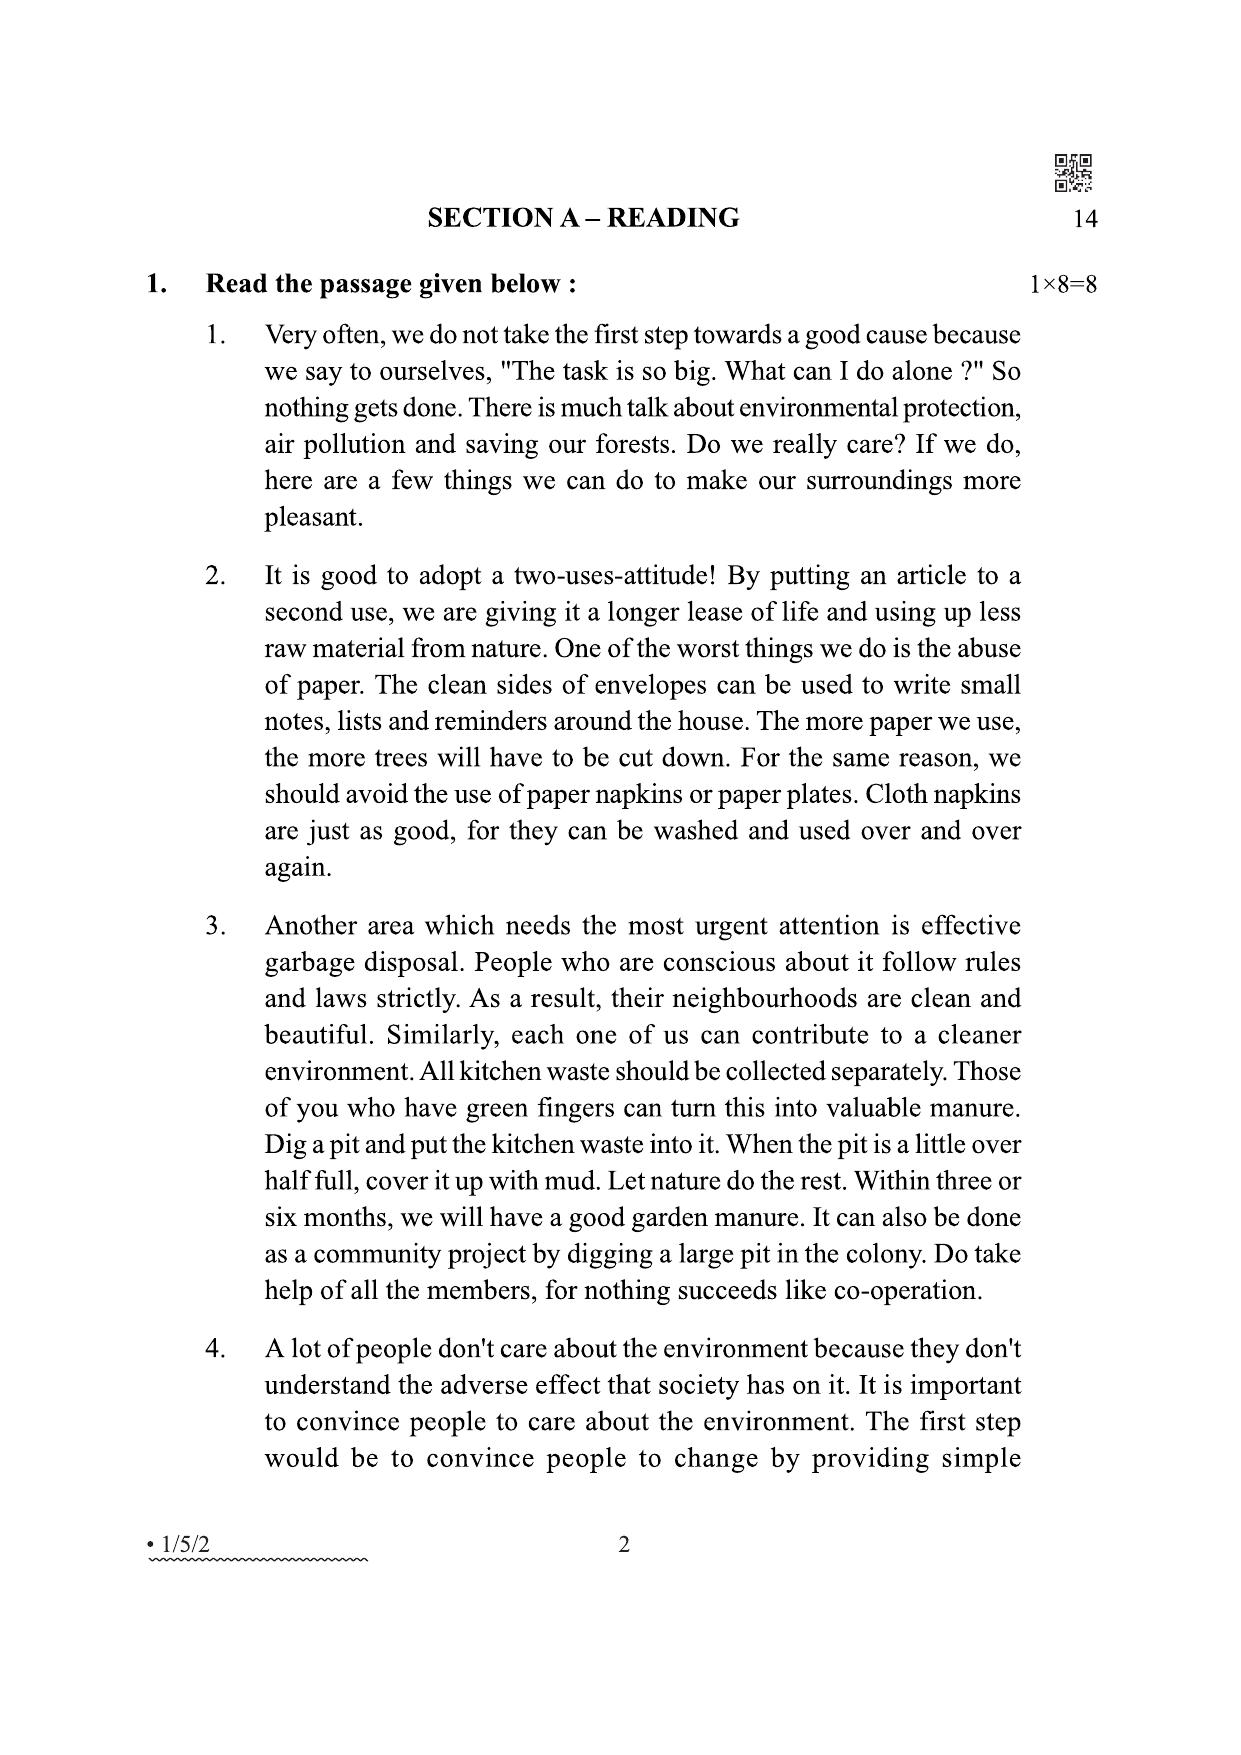 CBSE Class 12 1-5-2 English Core 2022 Question Paper - Page 2